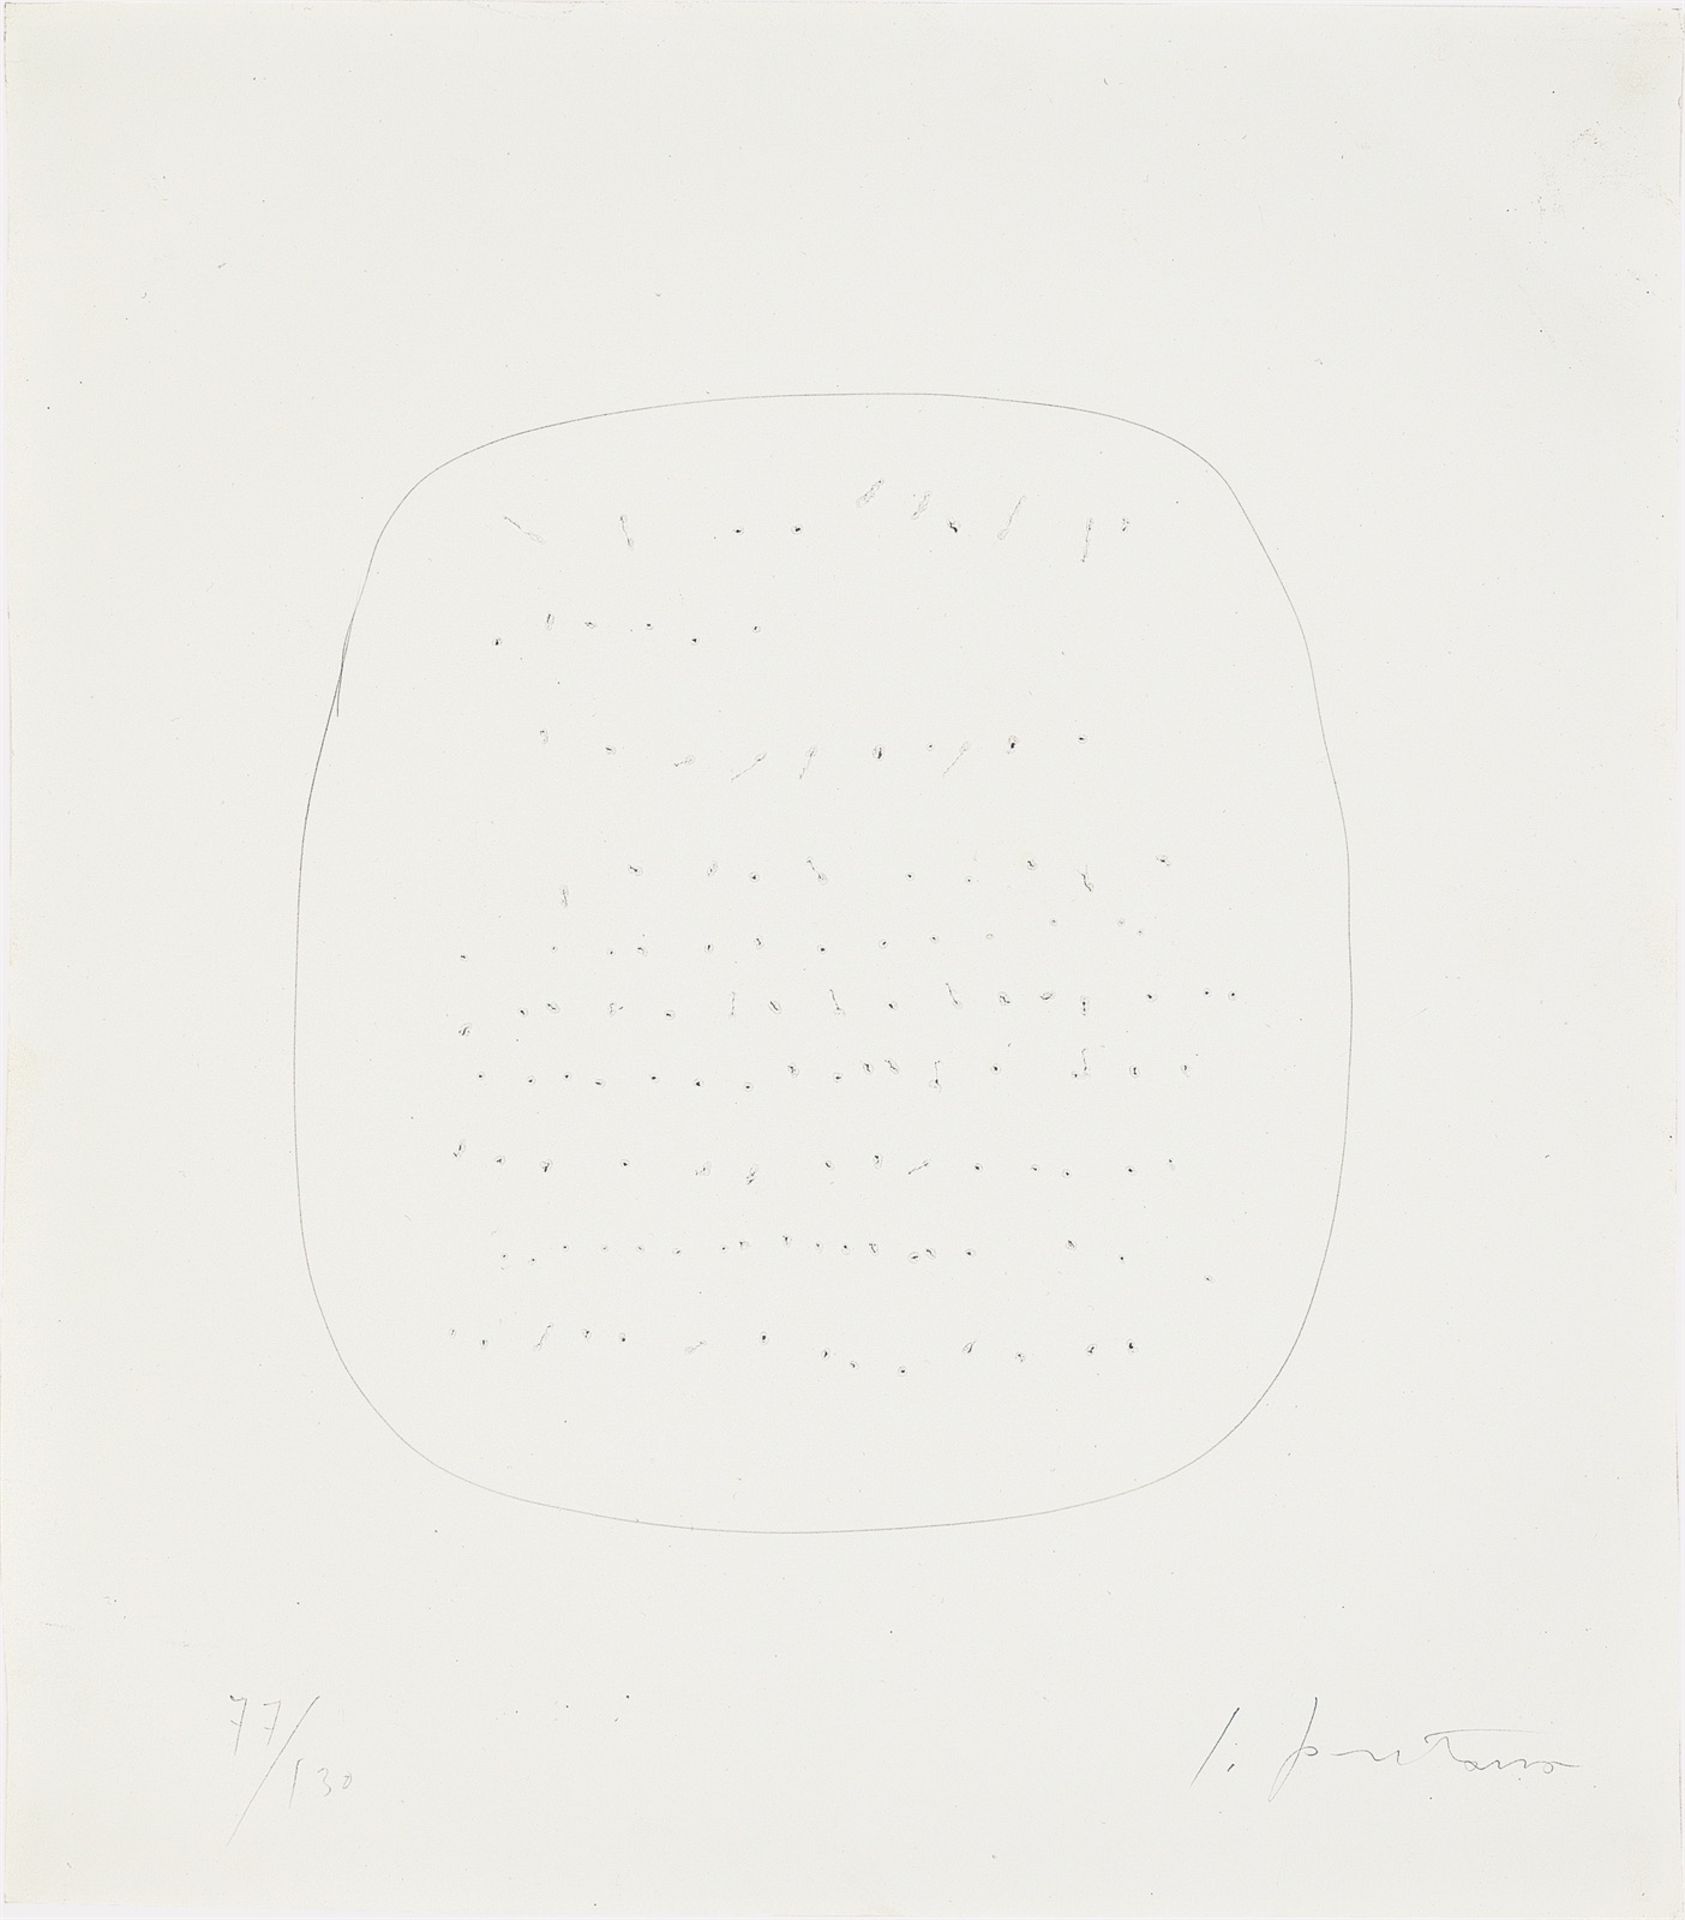 Lucio Fontana. ”Concetto Spaziale”, from ”Edition Original 1”. 1962–64